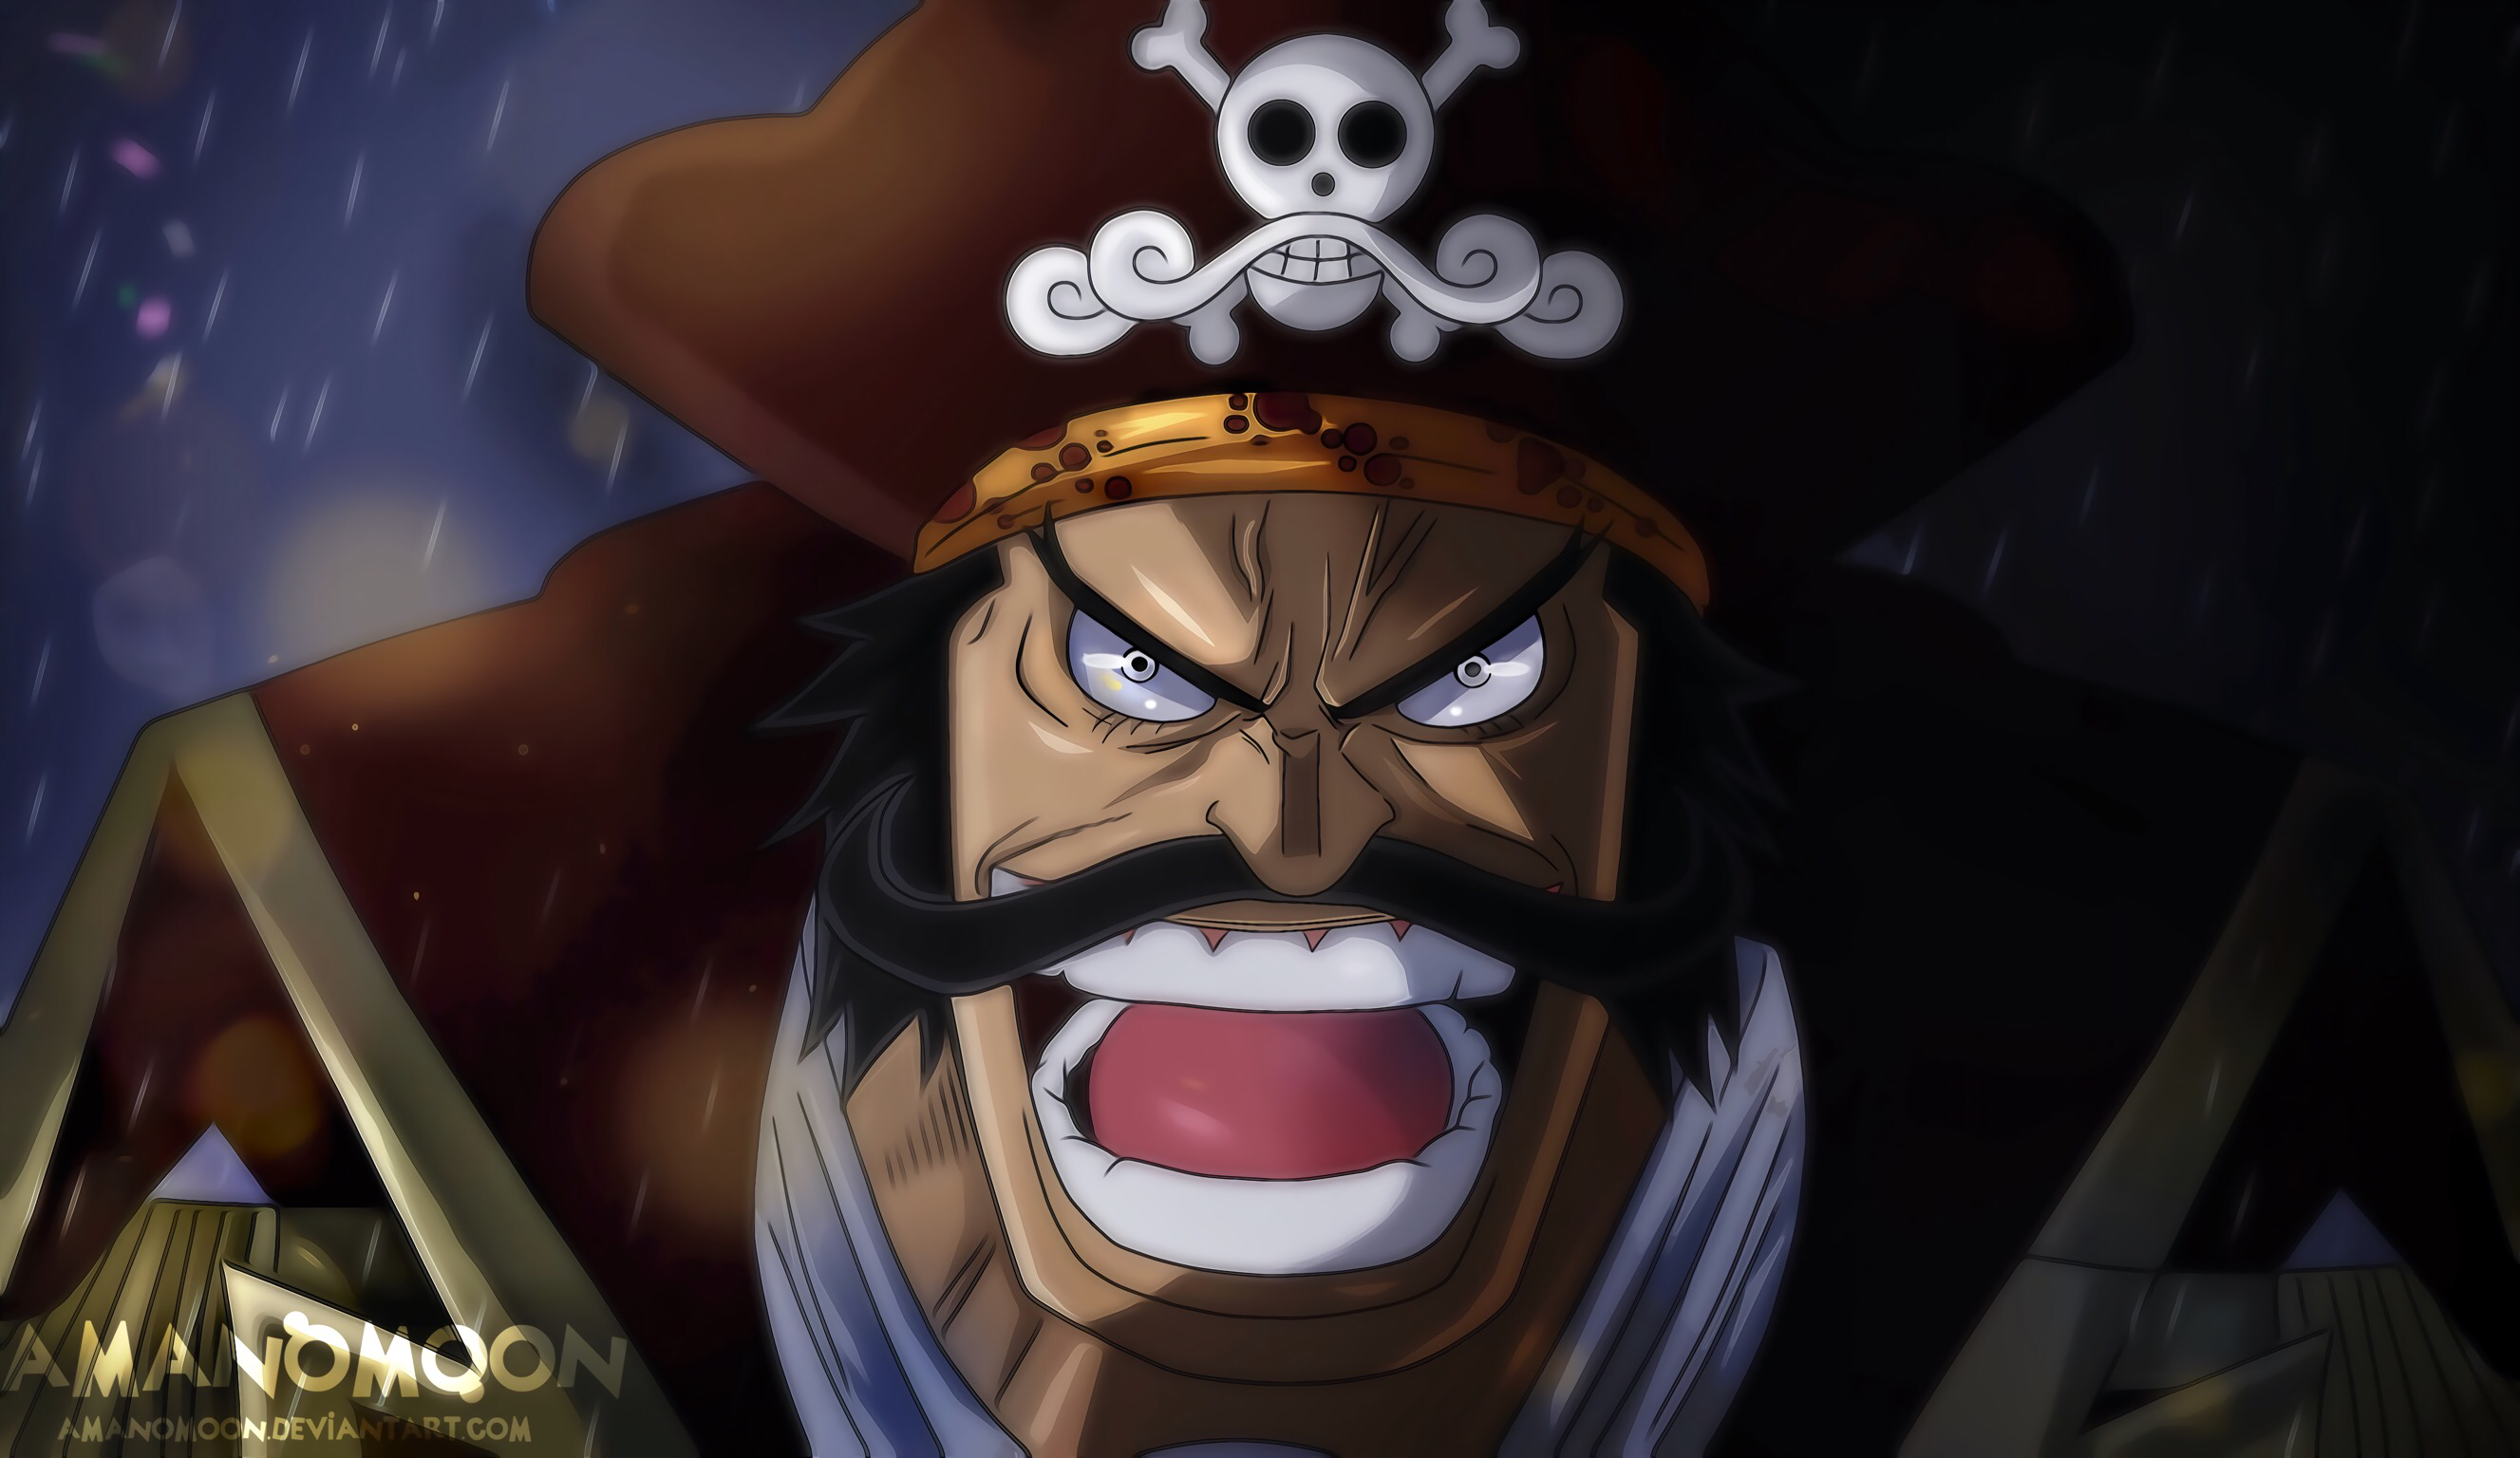 Anime 2654x1536 One Piece pirate king Amanomoon 